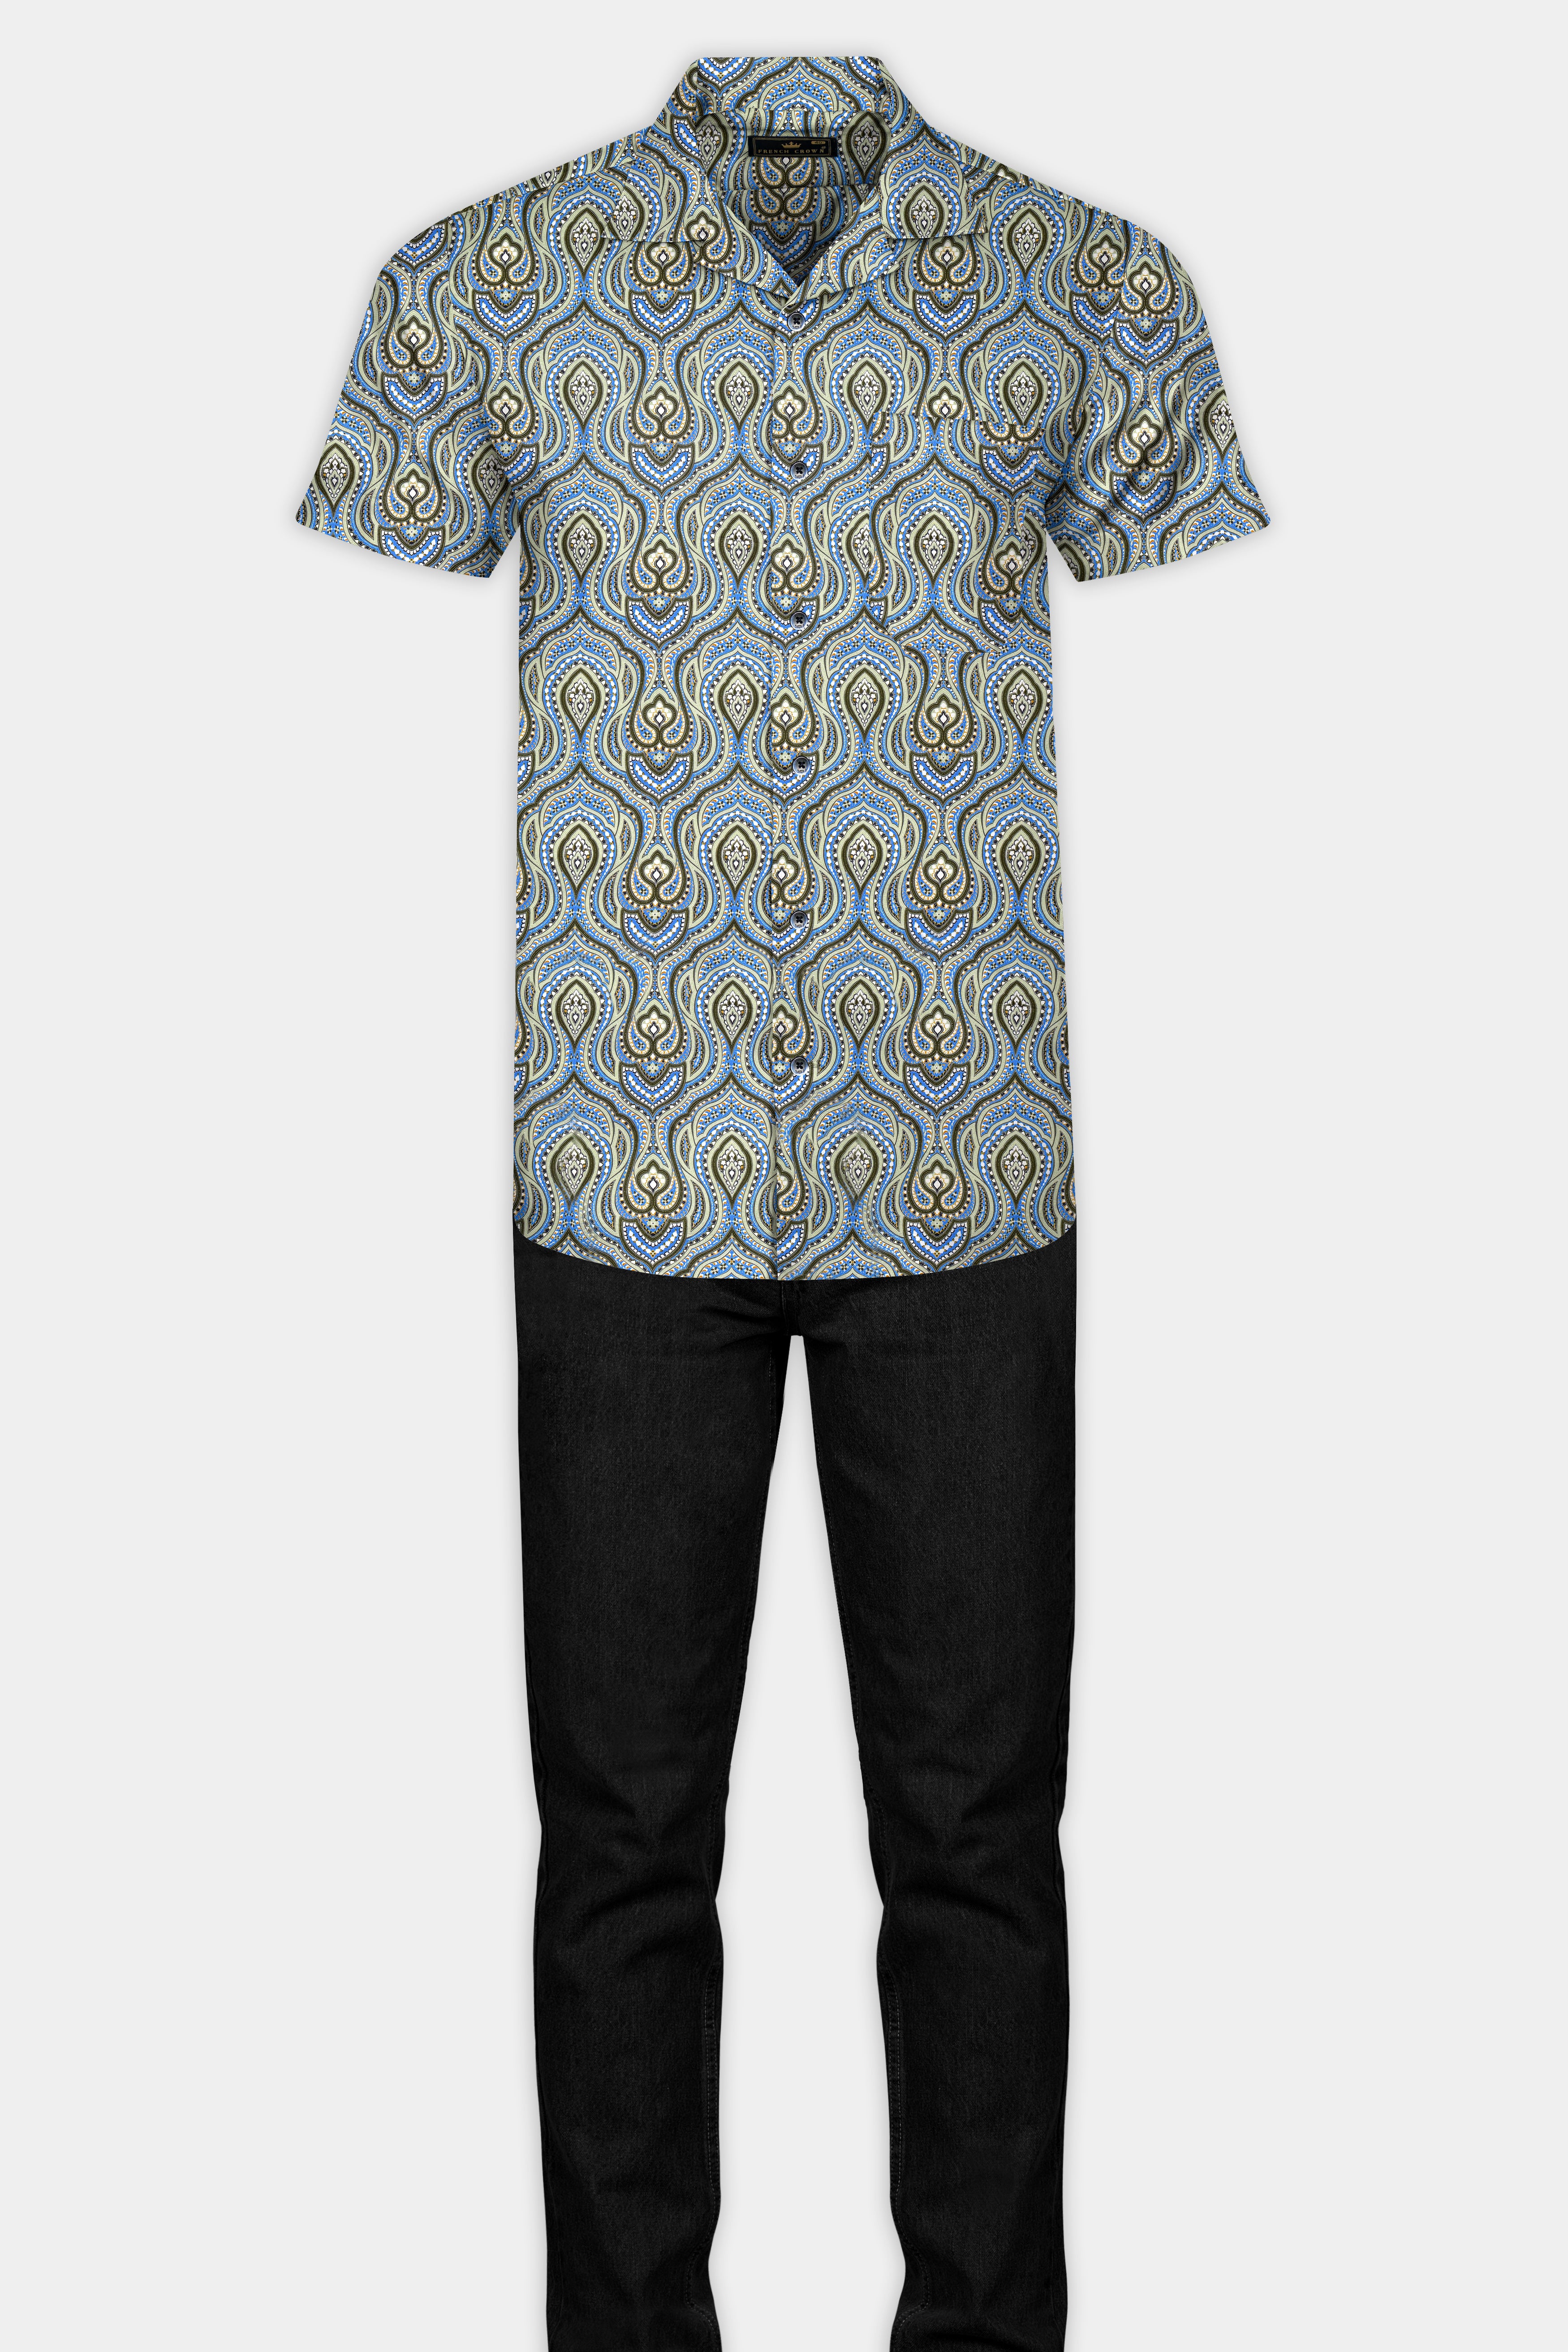 Taupe Green and Curious Blue Multicolour Ethnic Printed Subtle Sheen Super Soft Premium Cotton Shirt